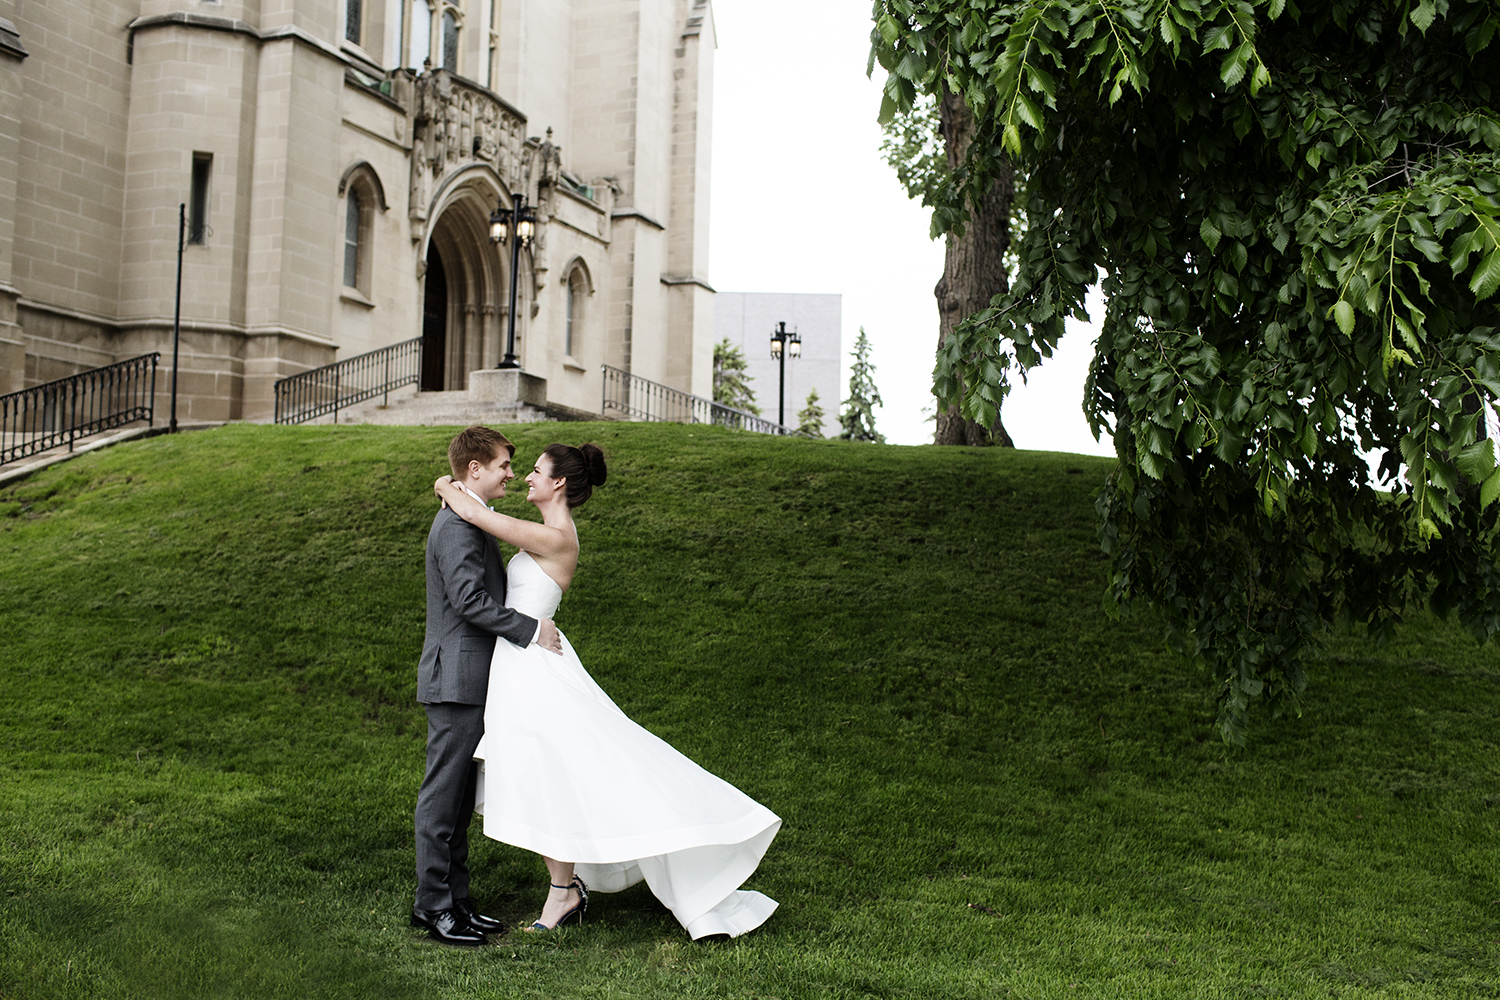 Loring Park Wedding Photos | Photography by Photogen Inc. | Eliesa Johnson | Based in Minneapolis, Minnesota